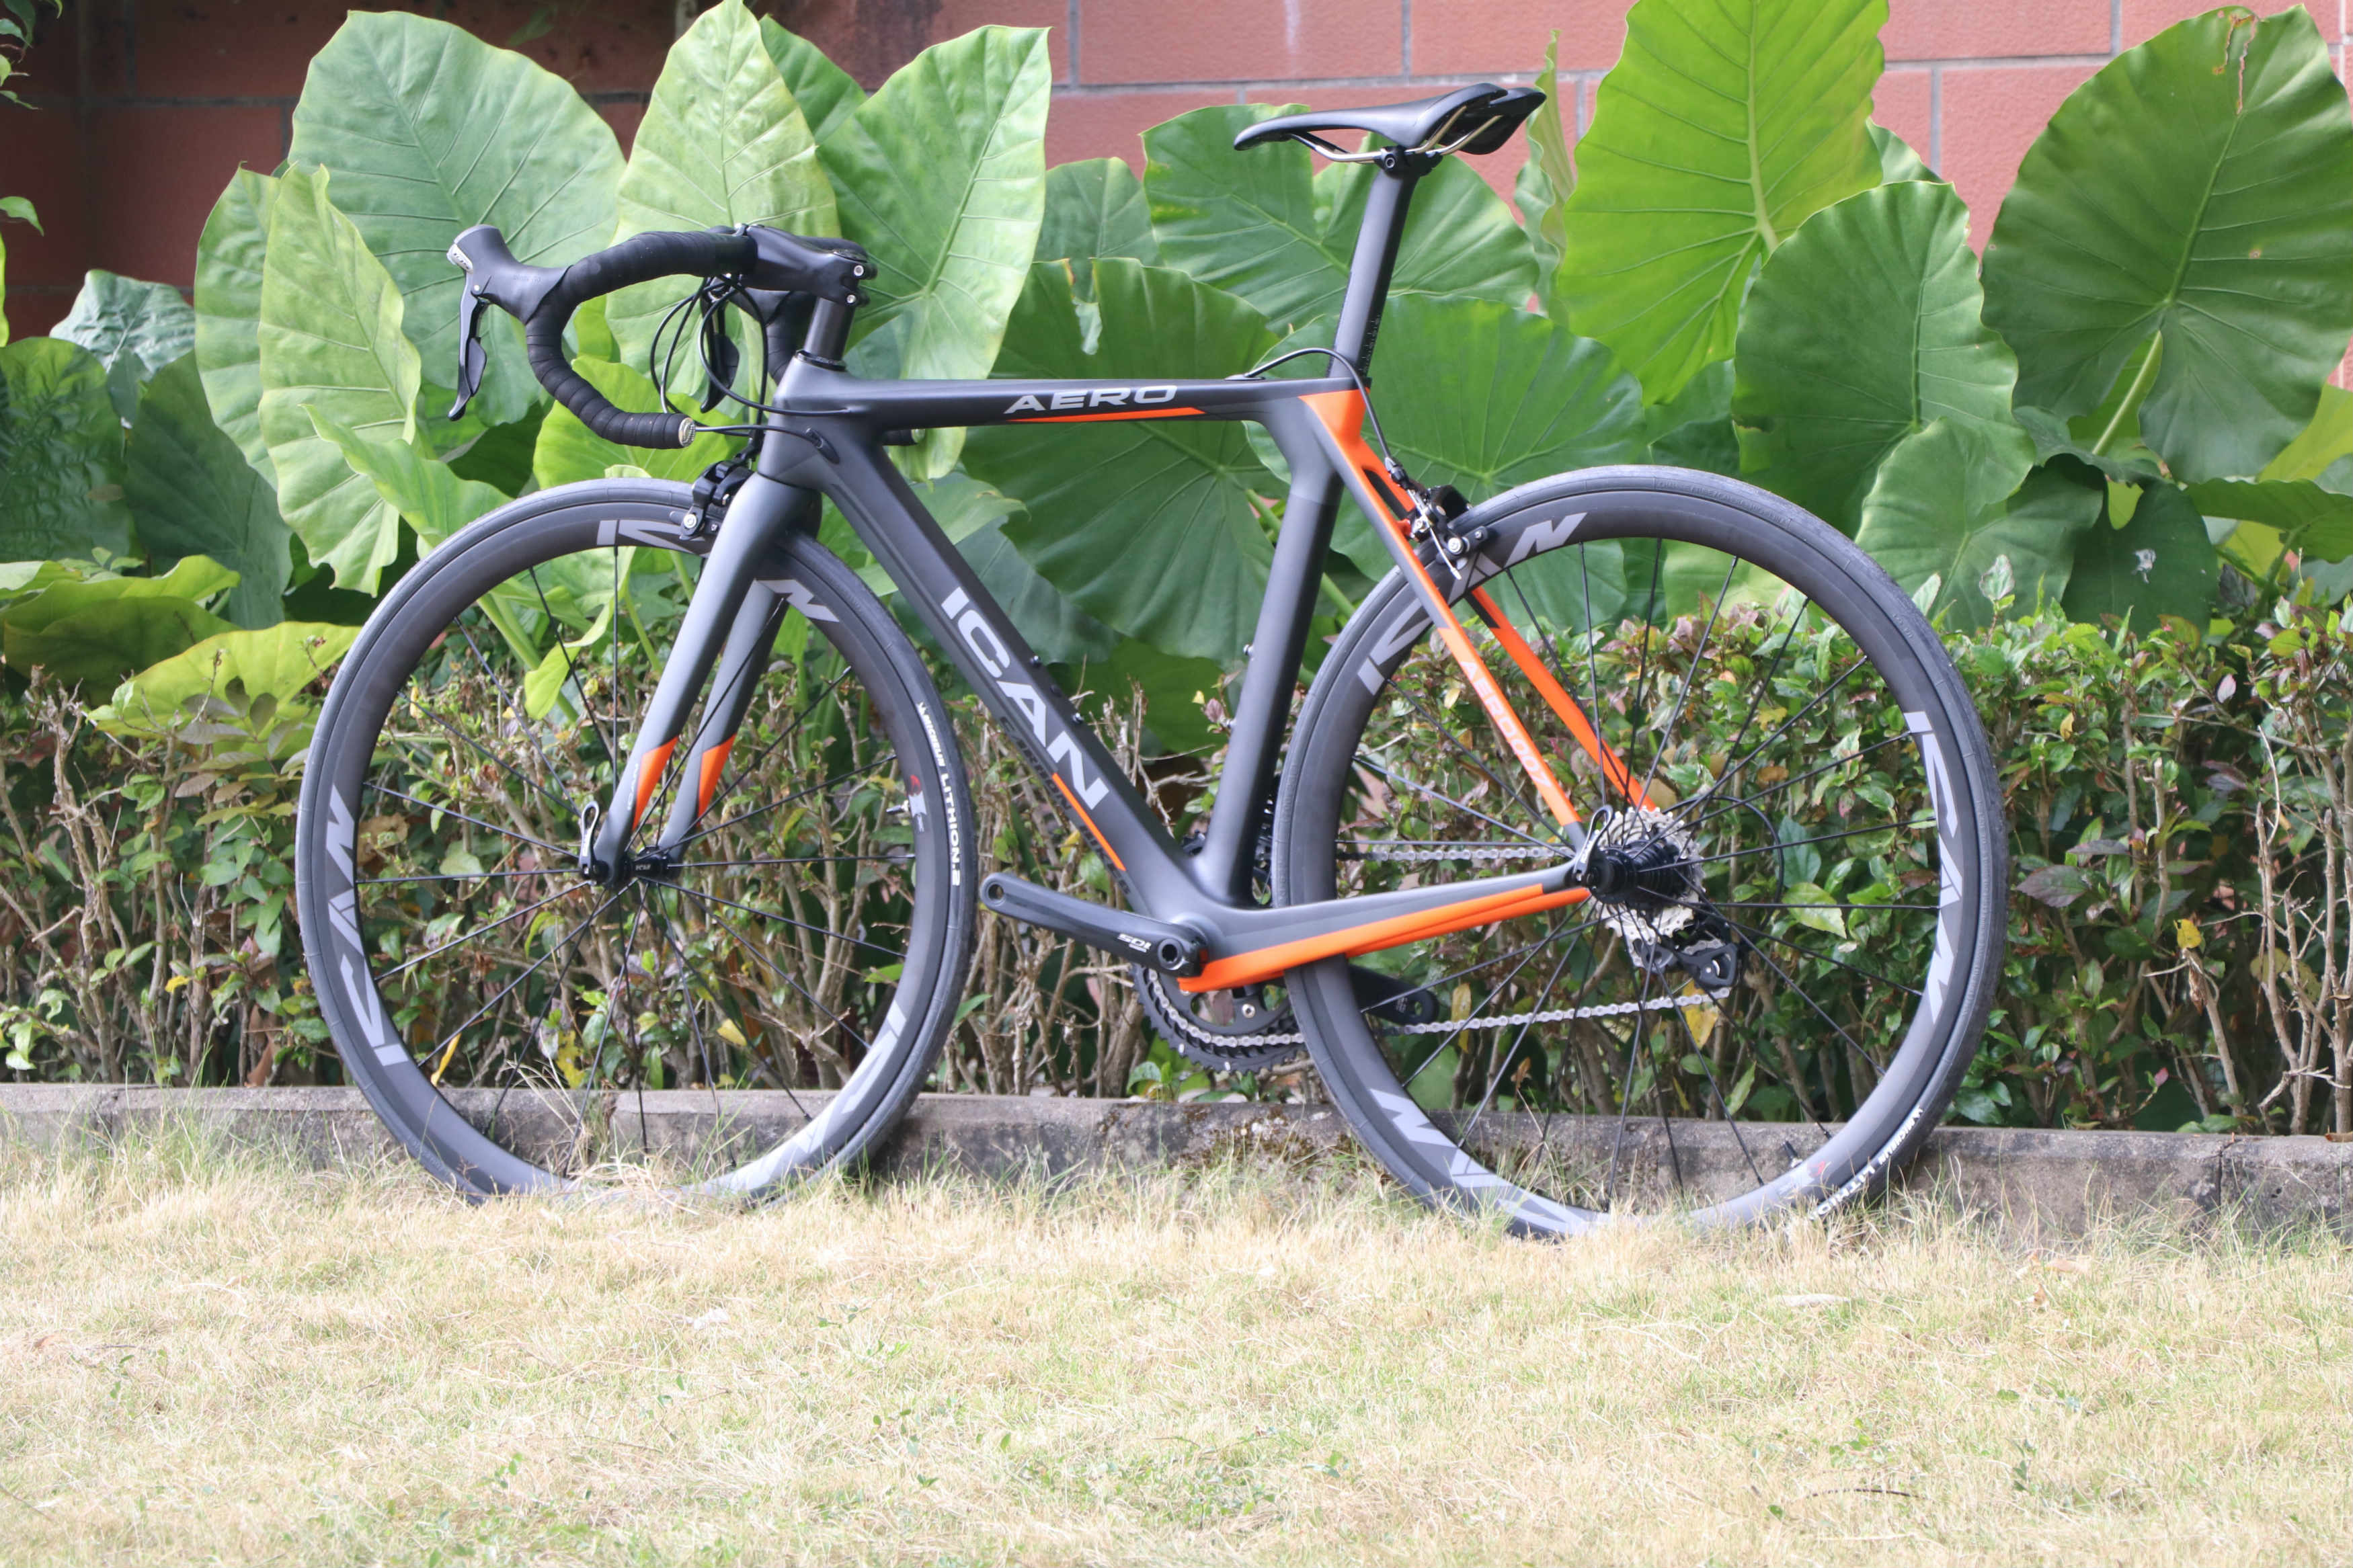 Aer007 ICAN Carbon bike 